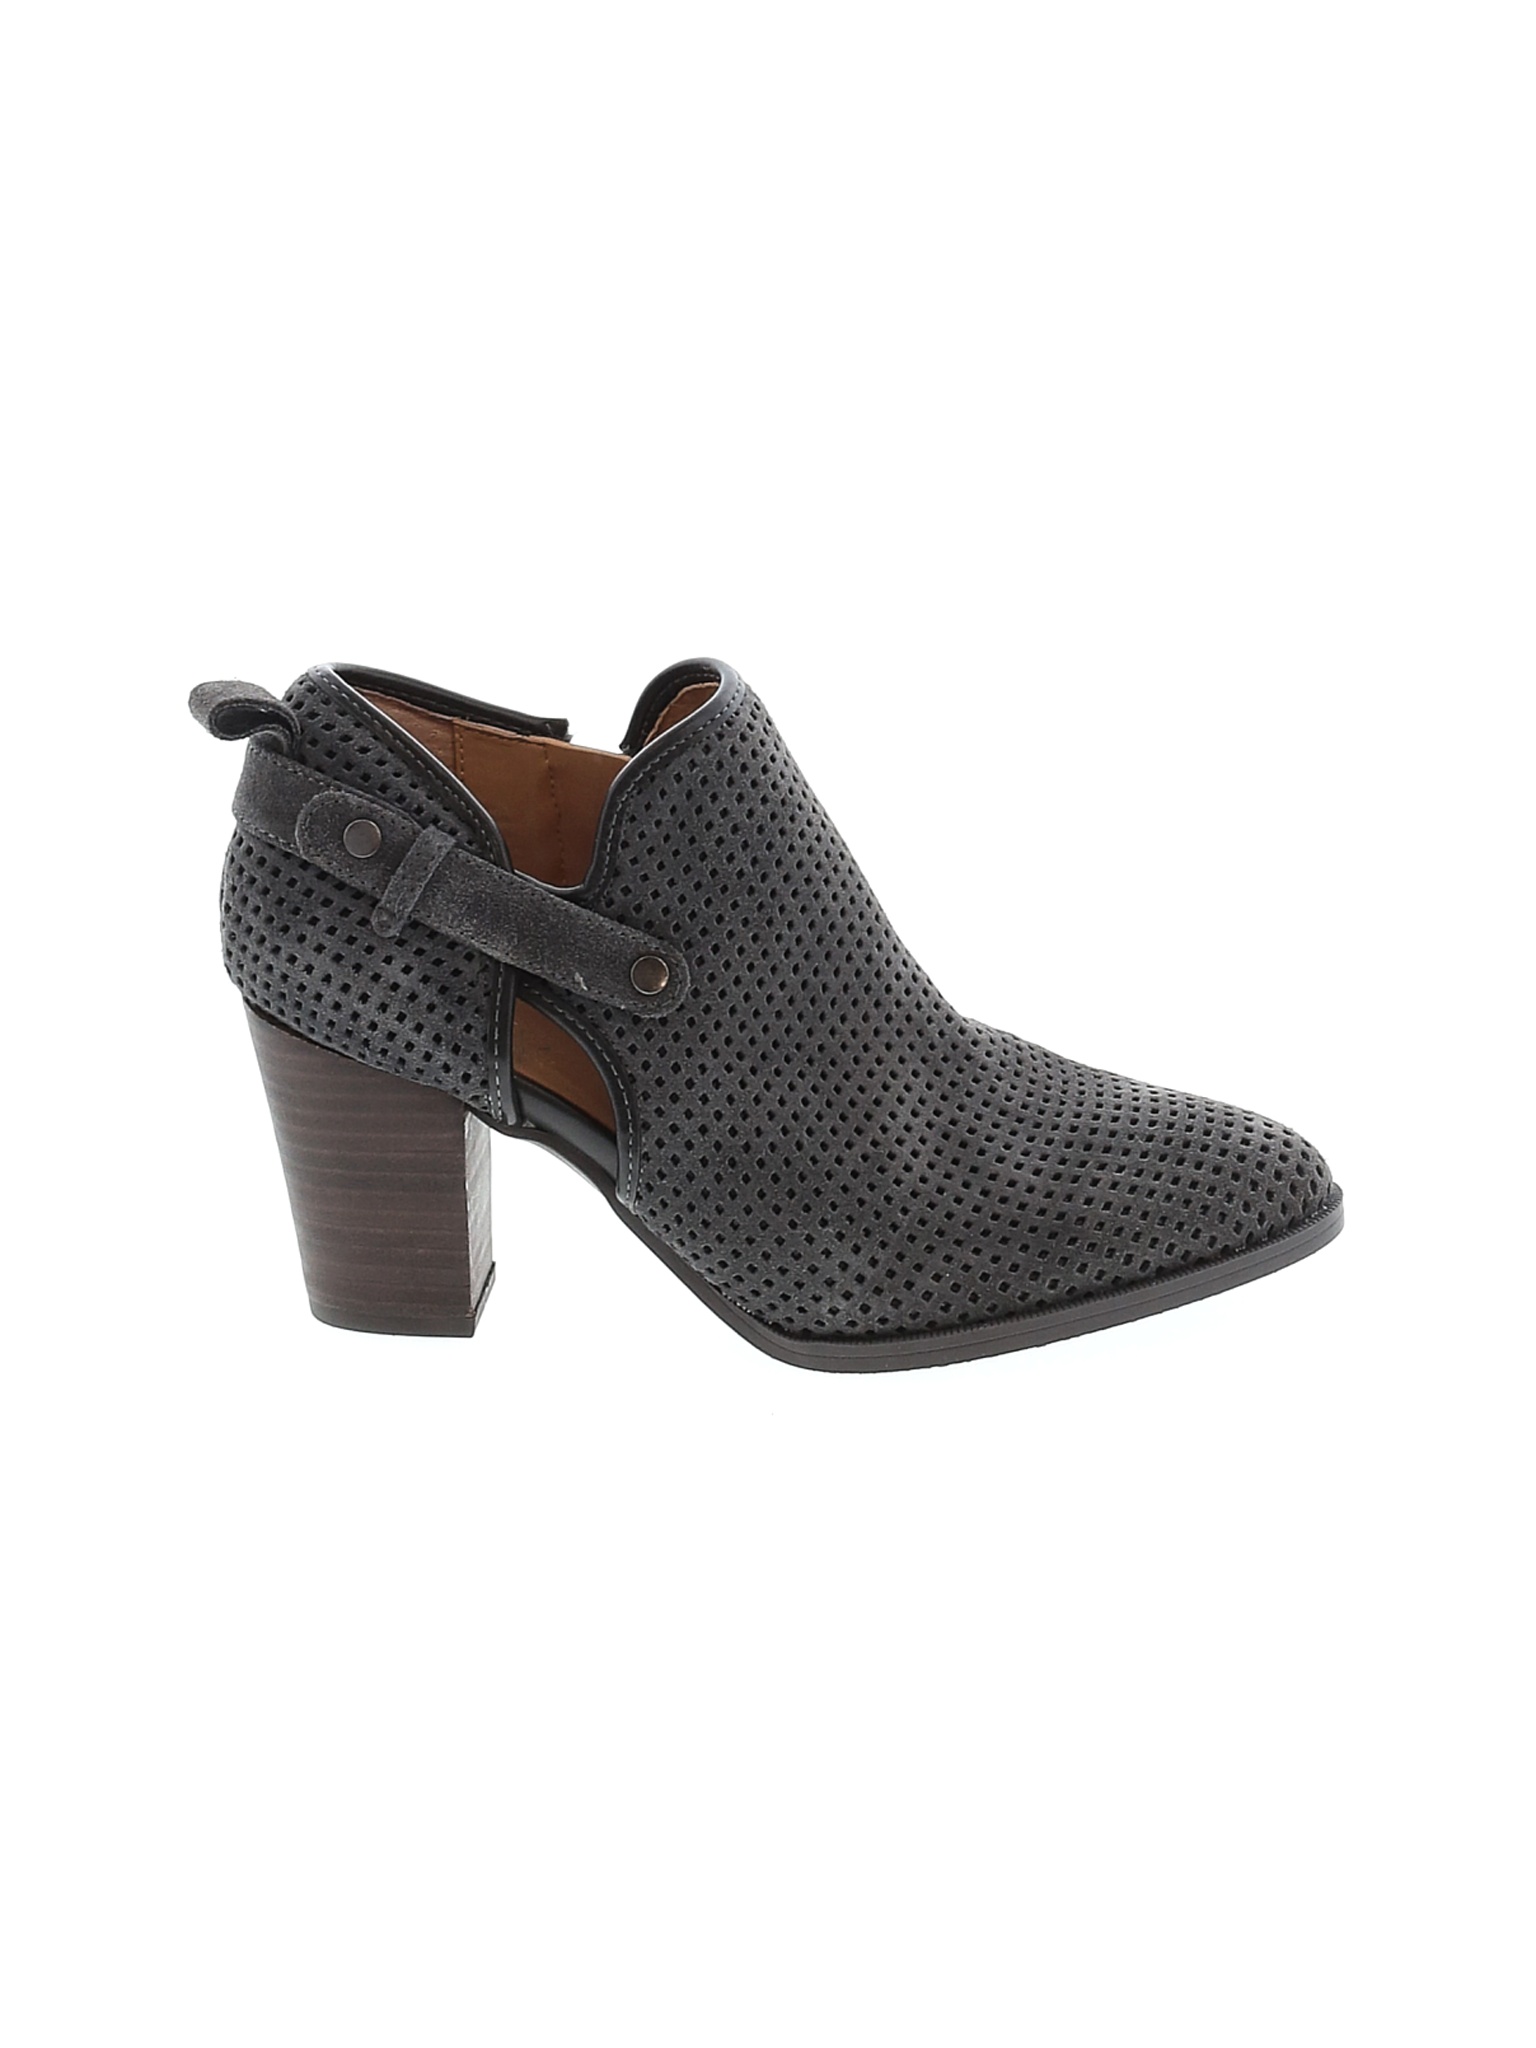 Franco Sarto Women Gray Ankle Boots US 8 | eBay